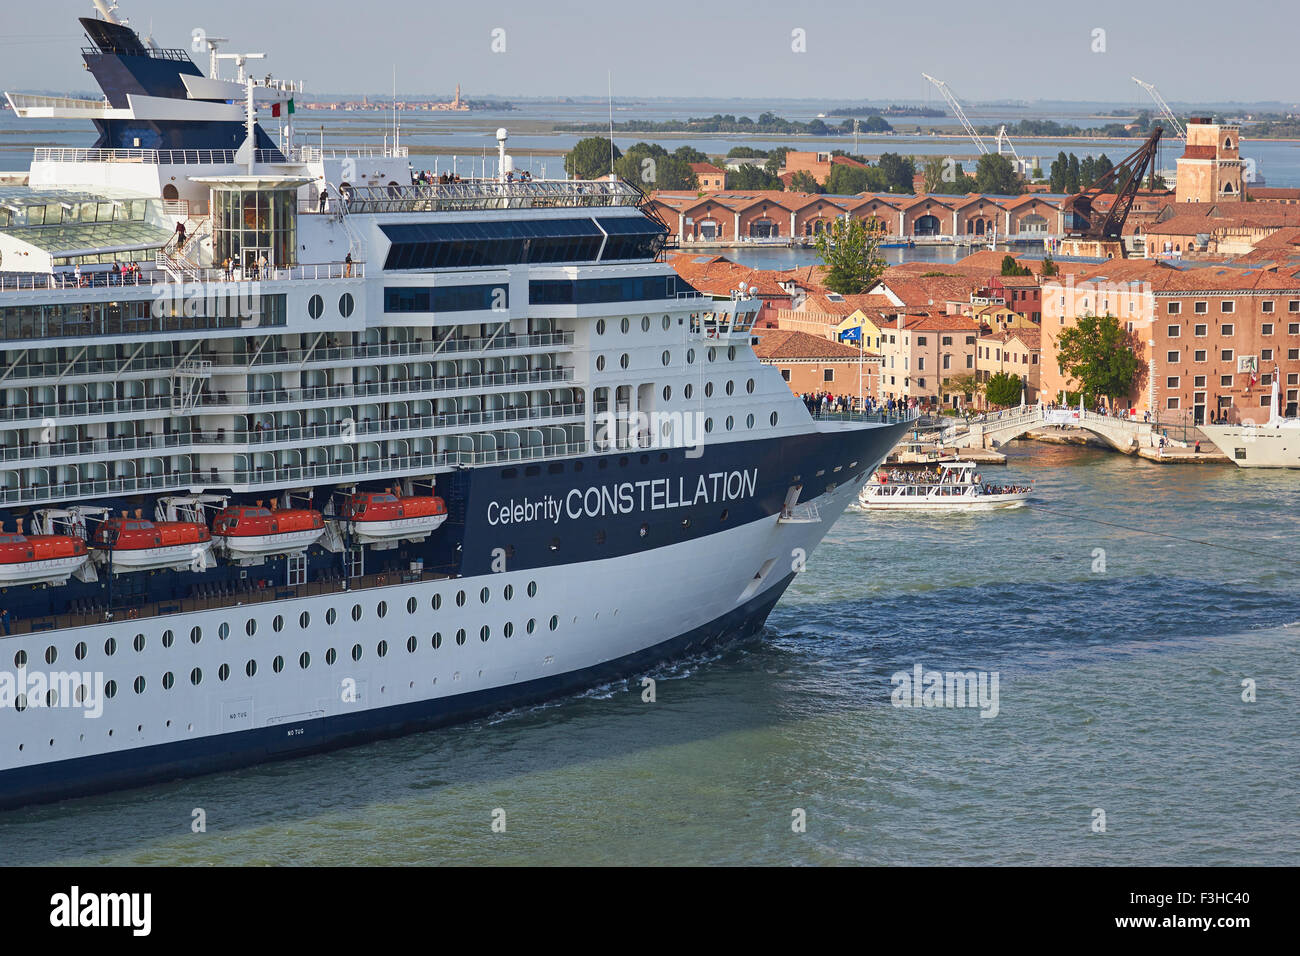 Riesige Kreuzfahrtschiff Celebrity Constellation in der venezianischen Lagune Venedig Veneto Italien Europa Stockfoto